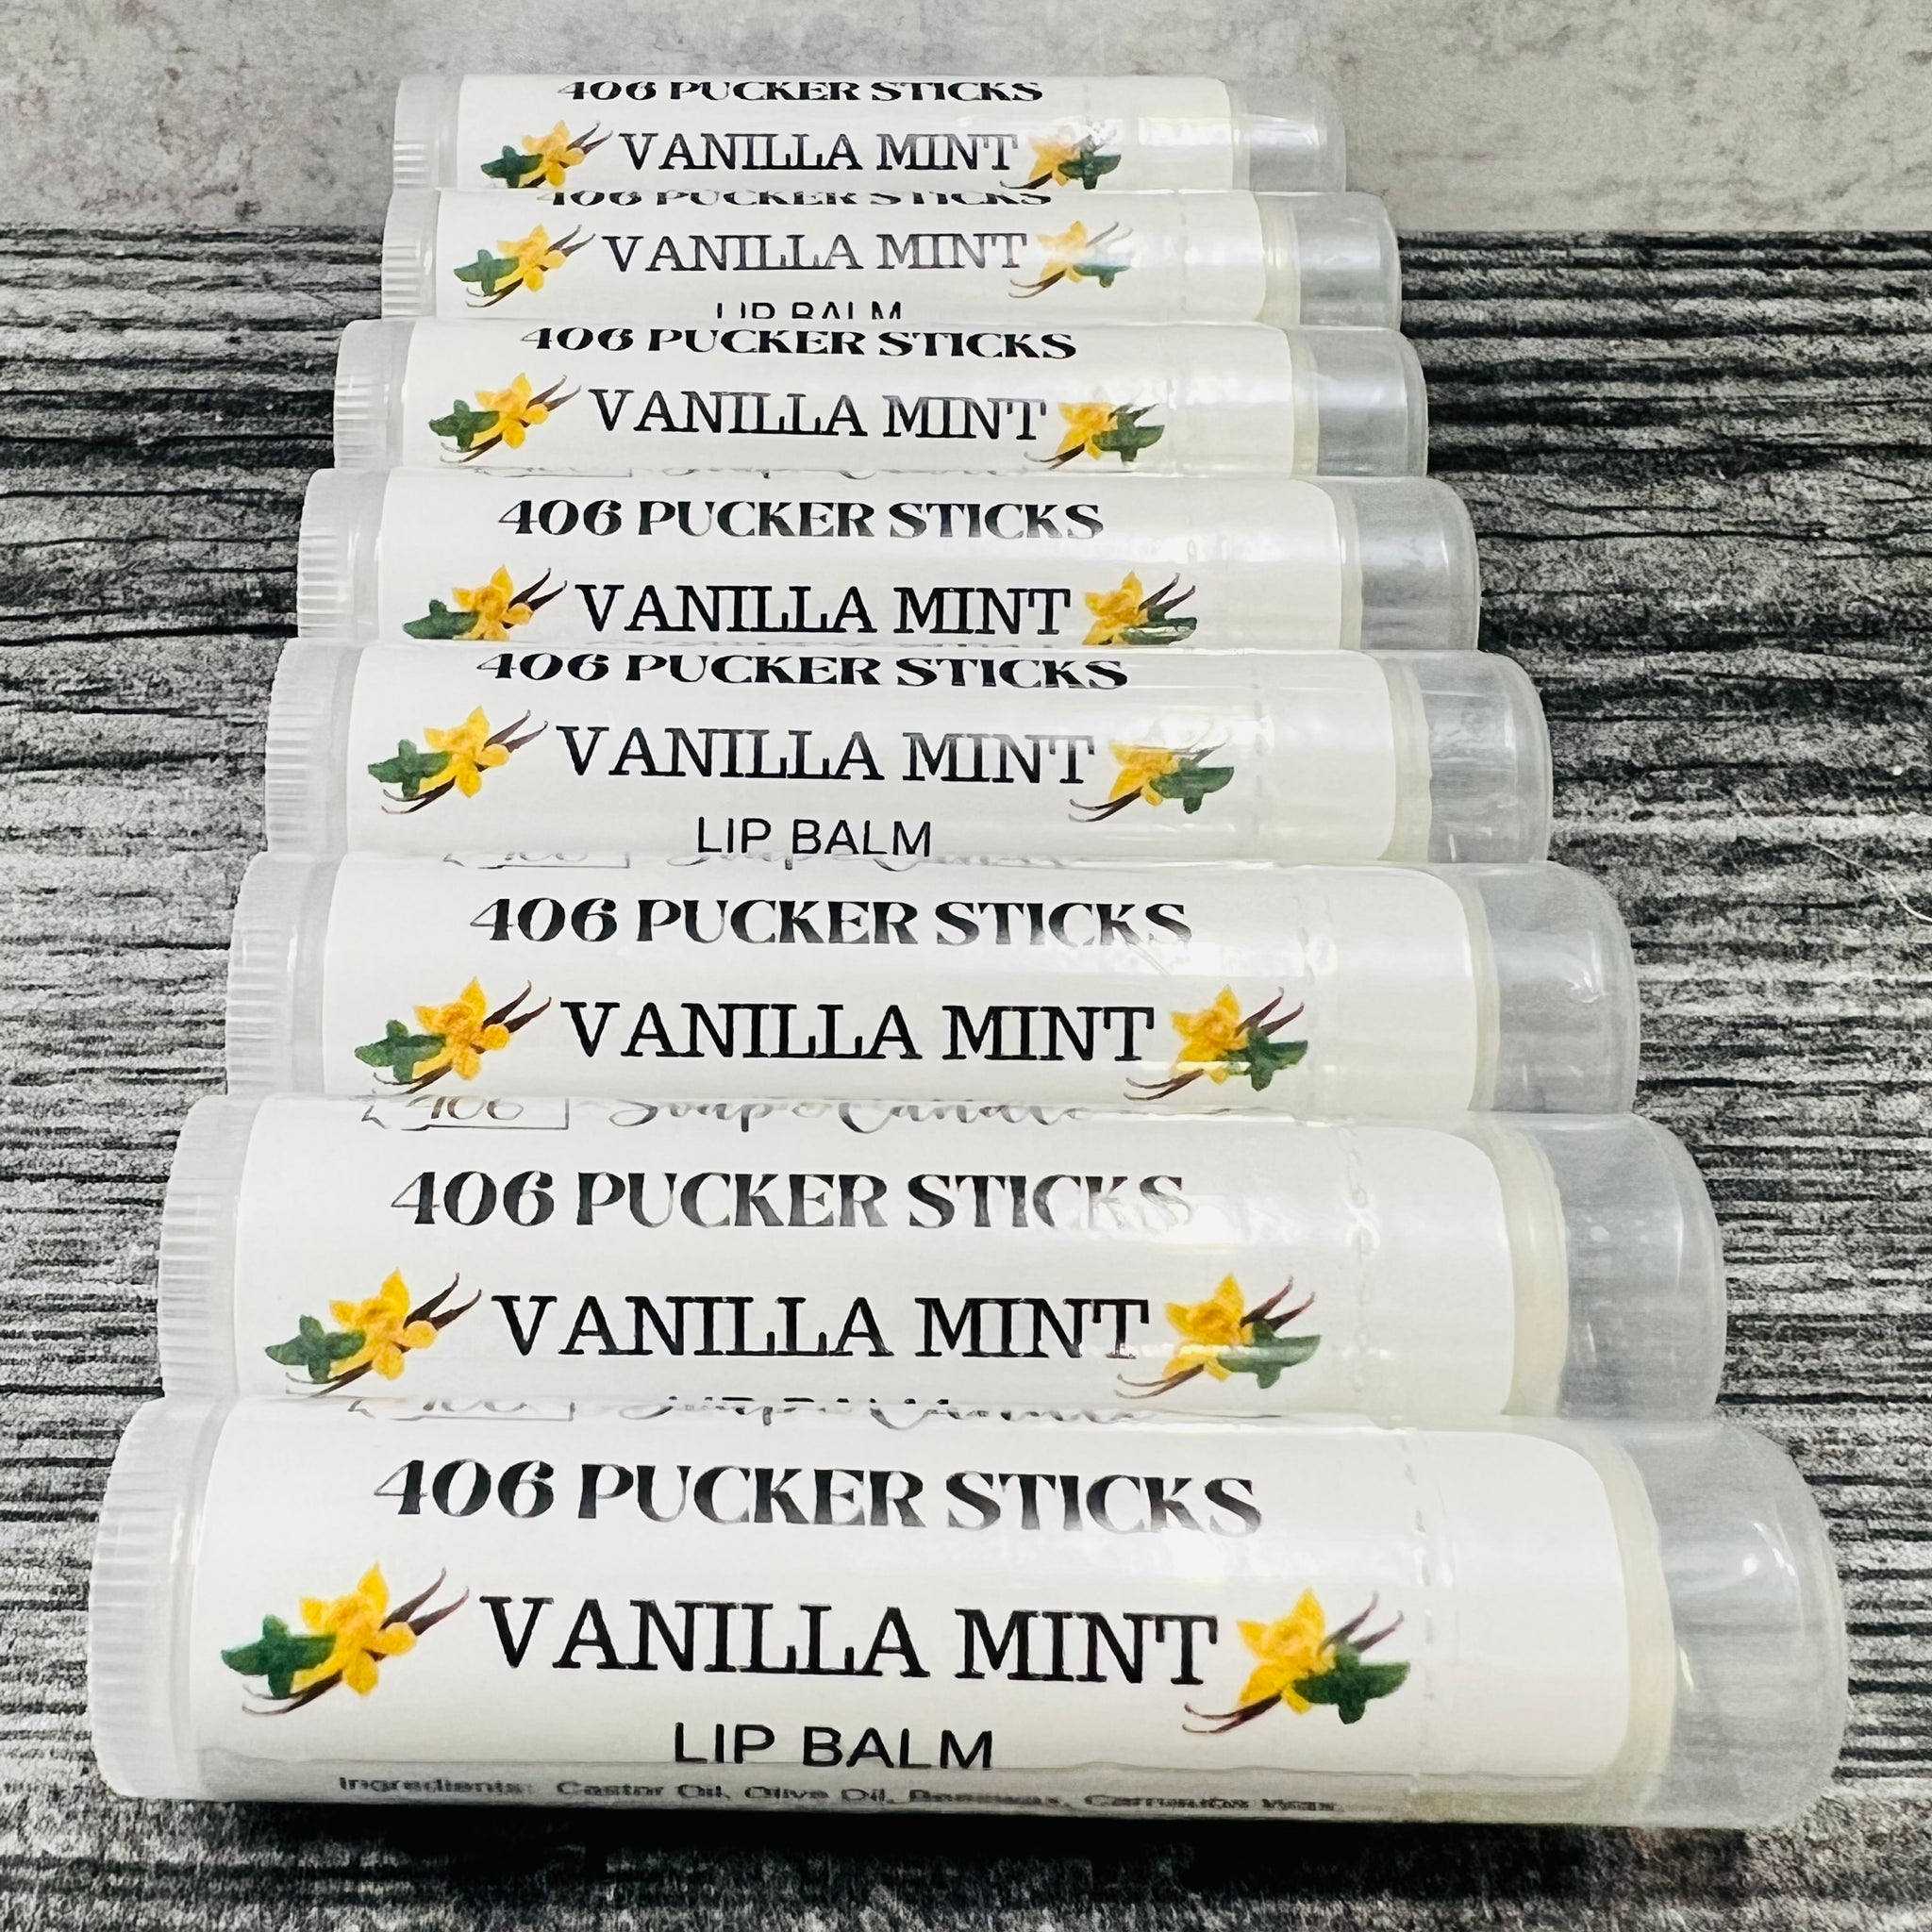 406 Pucker Sticks Vanilla Mint Lip Balm